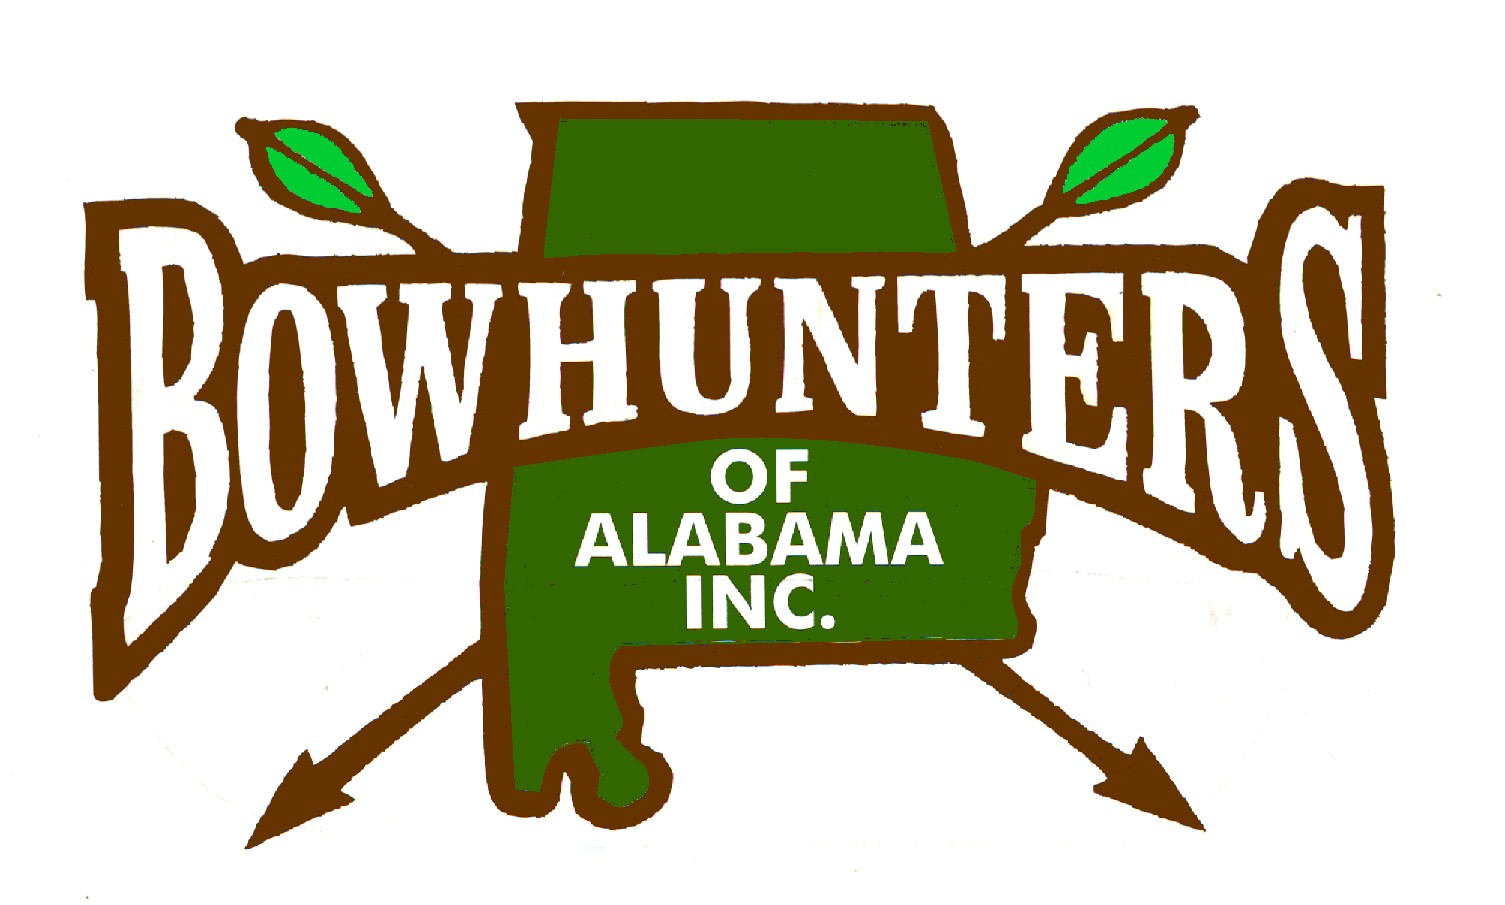 Bowhunters of Alabama